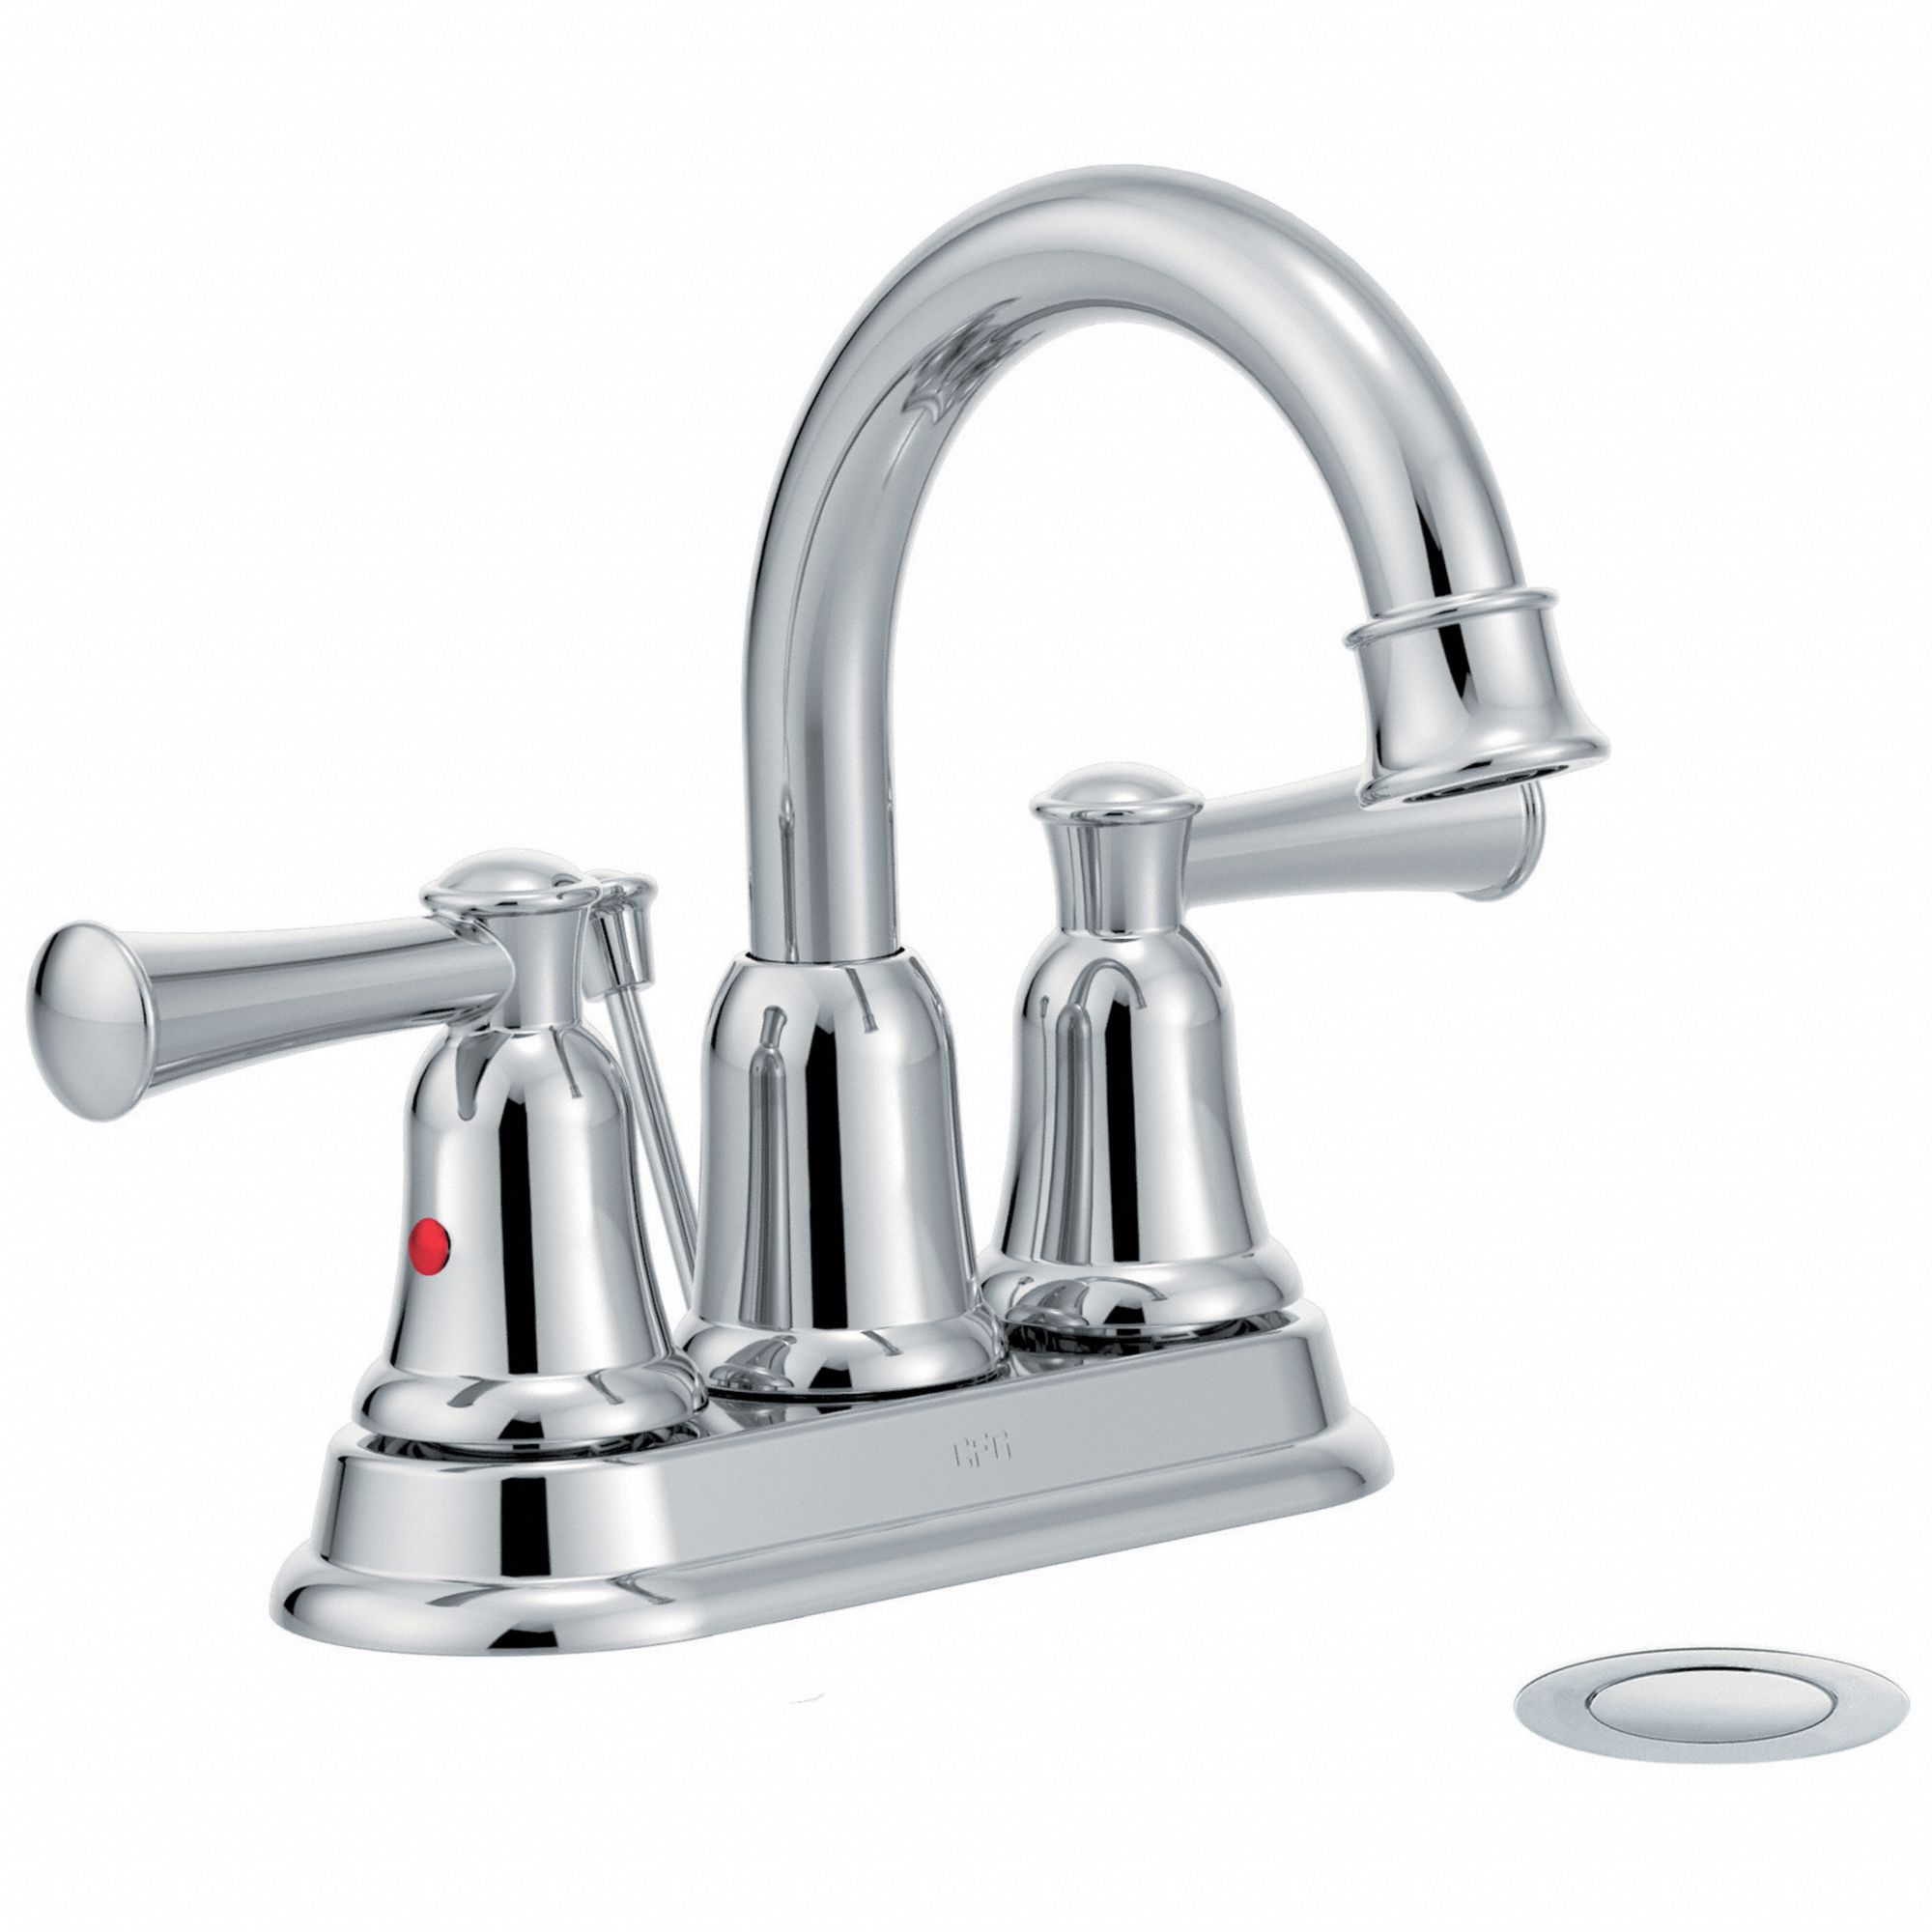 Bathroom Faucet: Cornerstone®, Chrome Finish, 1.5 gpm Flow Rate, Manual, ADA Compliance